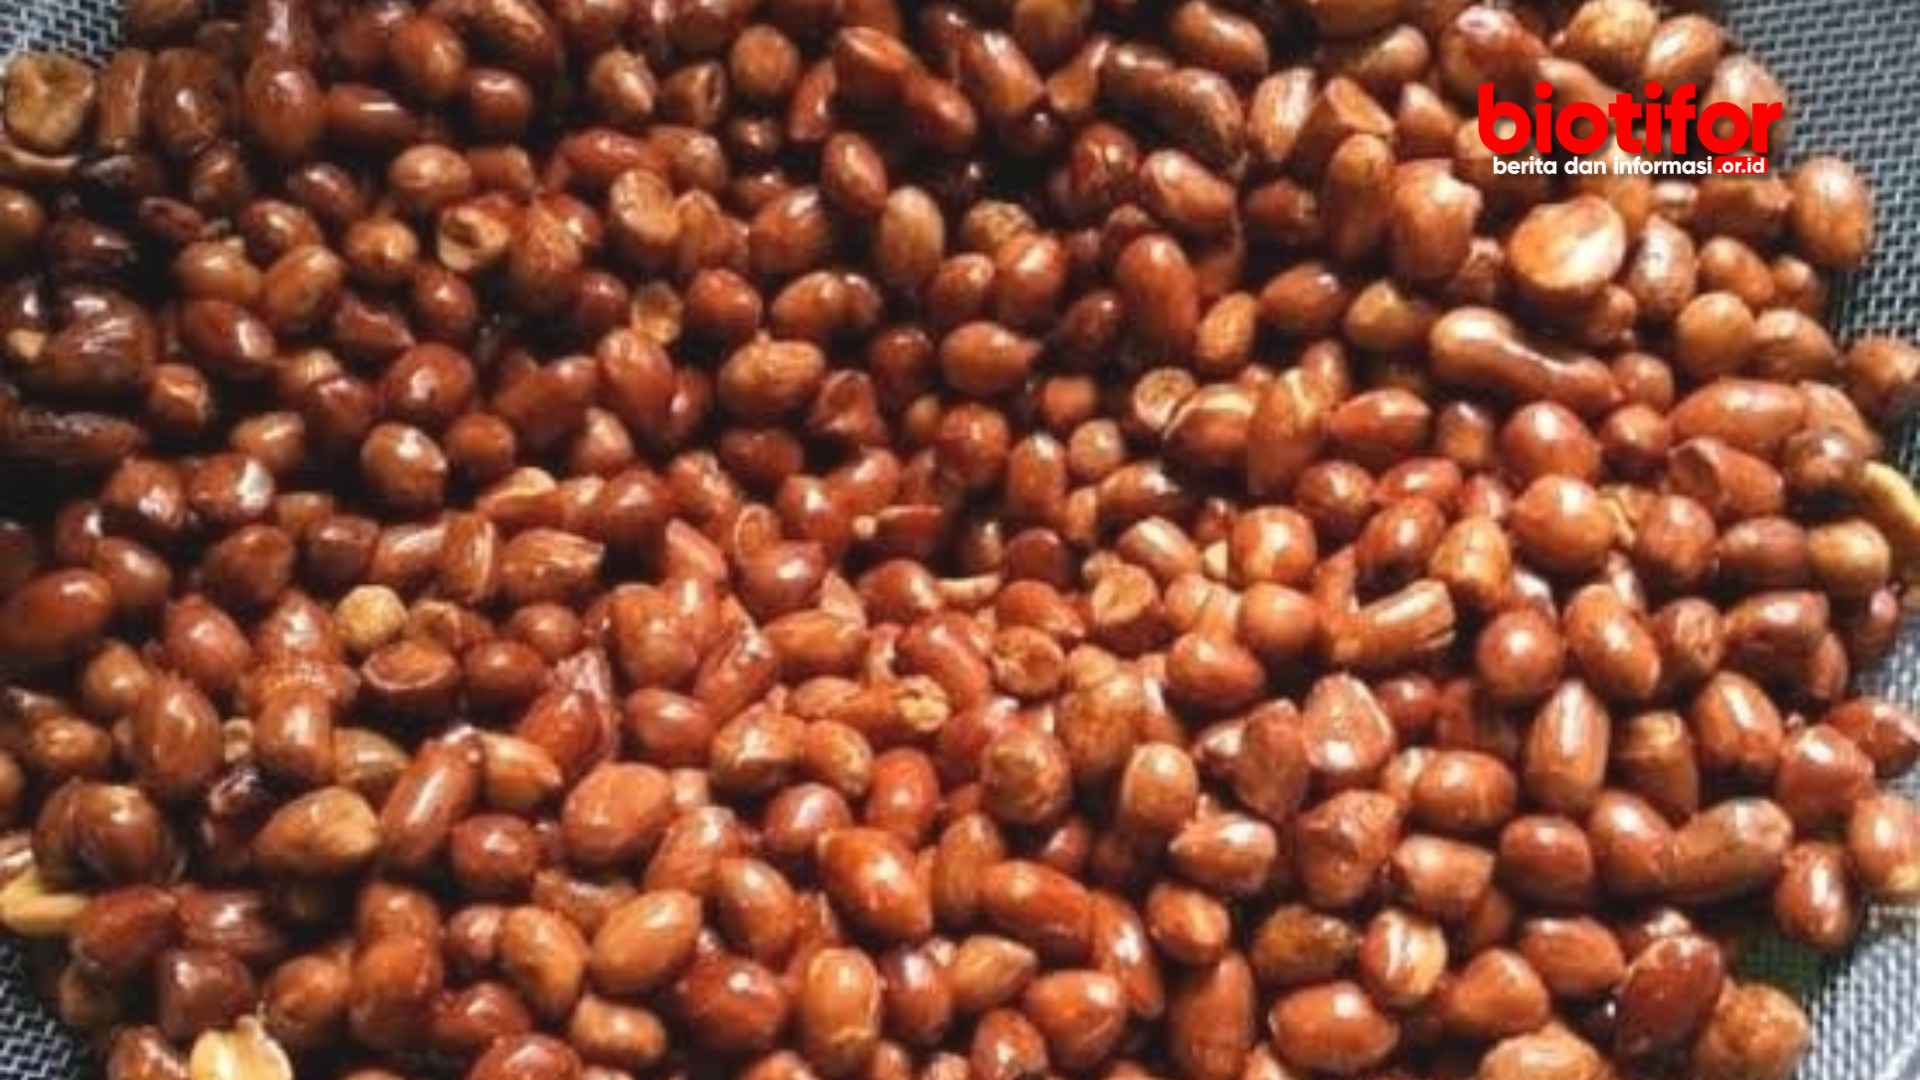 Manfaat Kacang Tanah Goreng